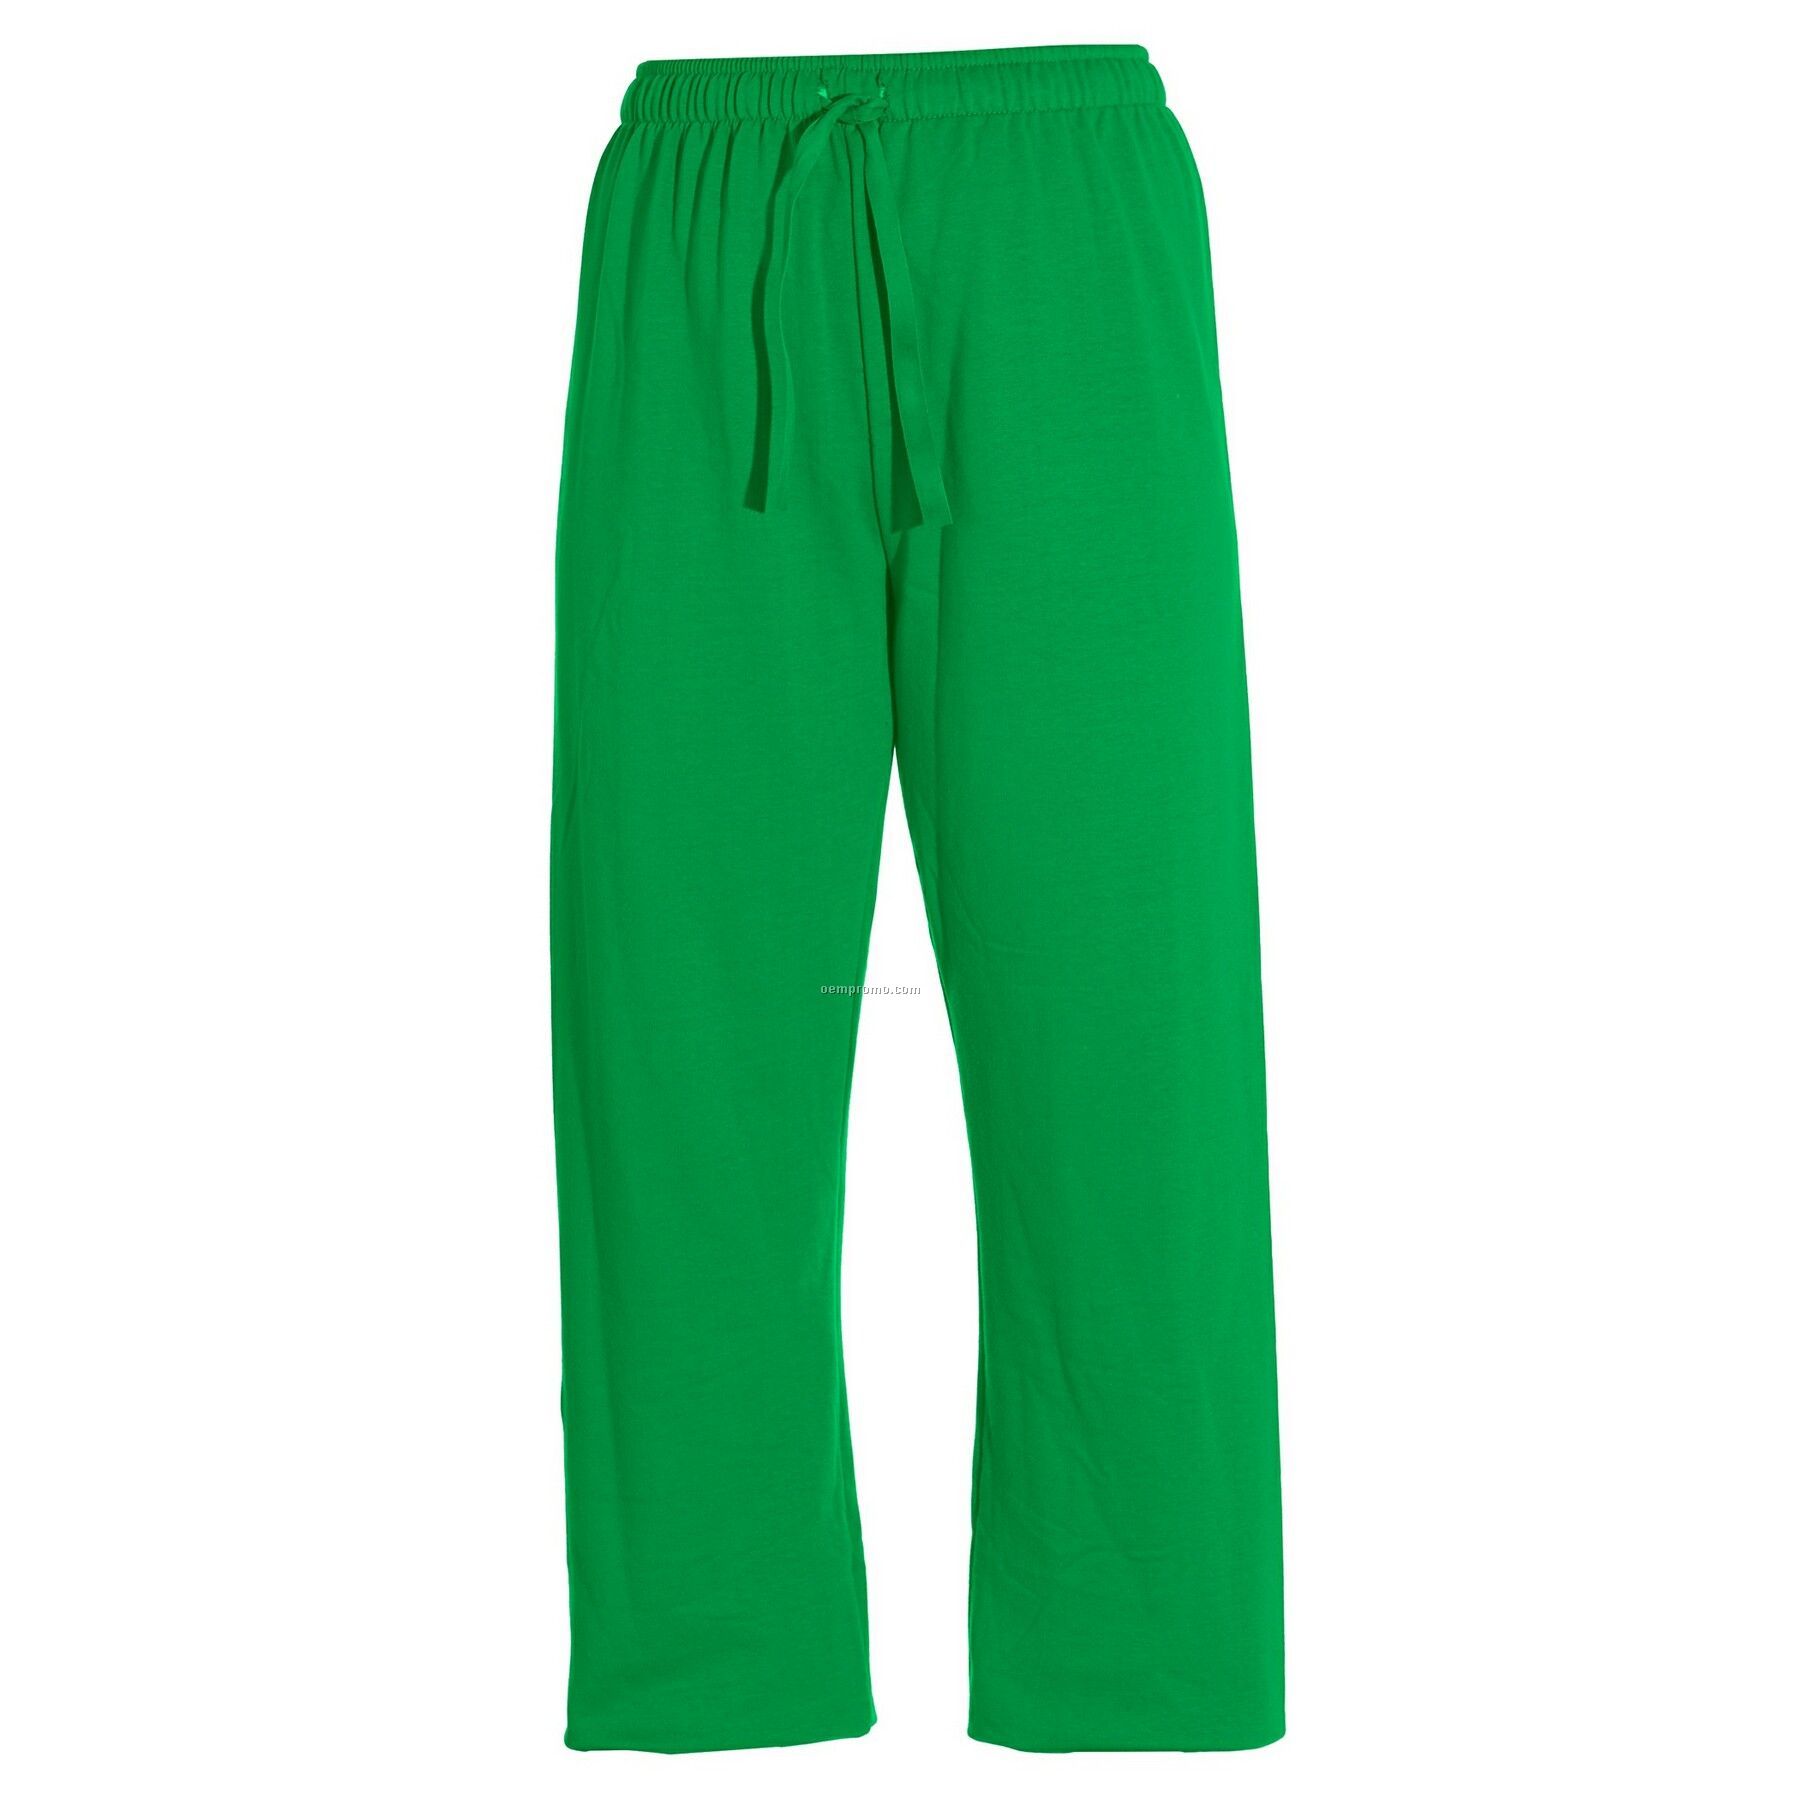 clip art green pants - Clip Art Library